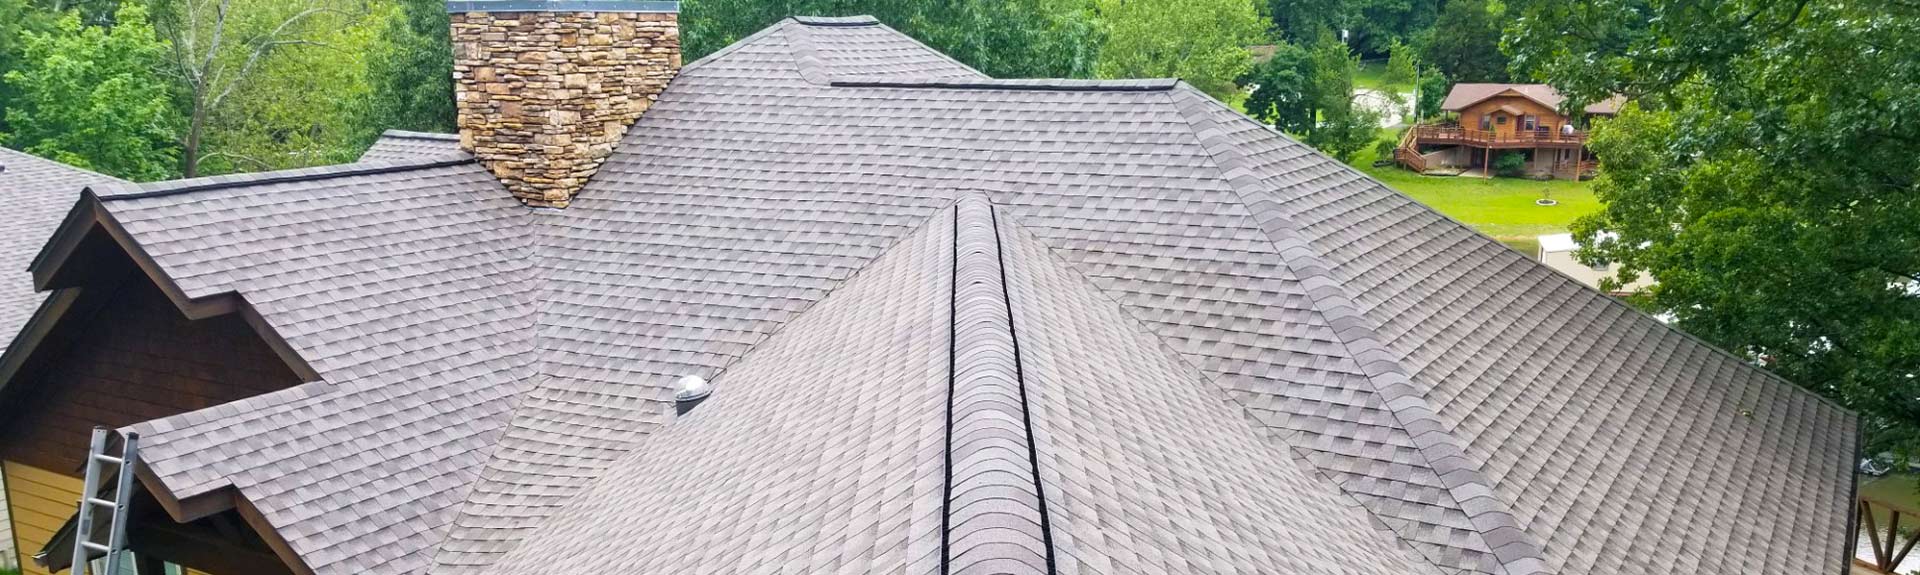 Roof Financing Roof Shingles